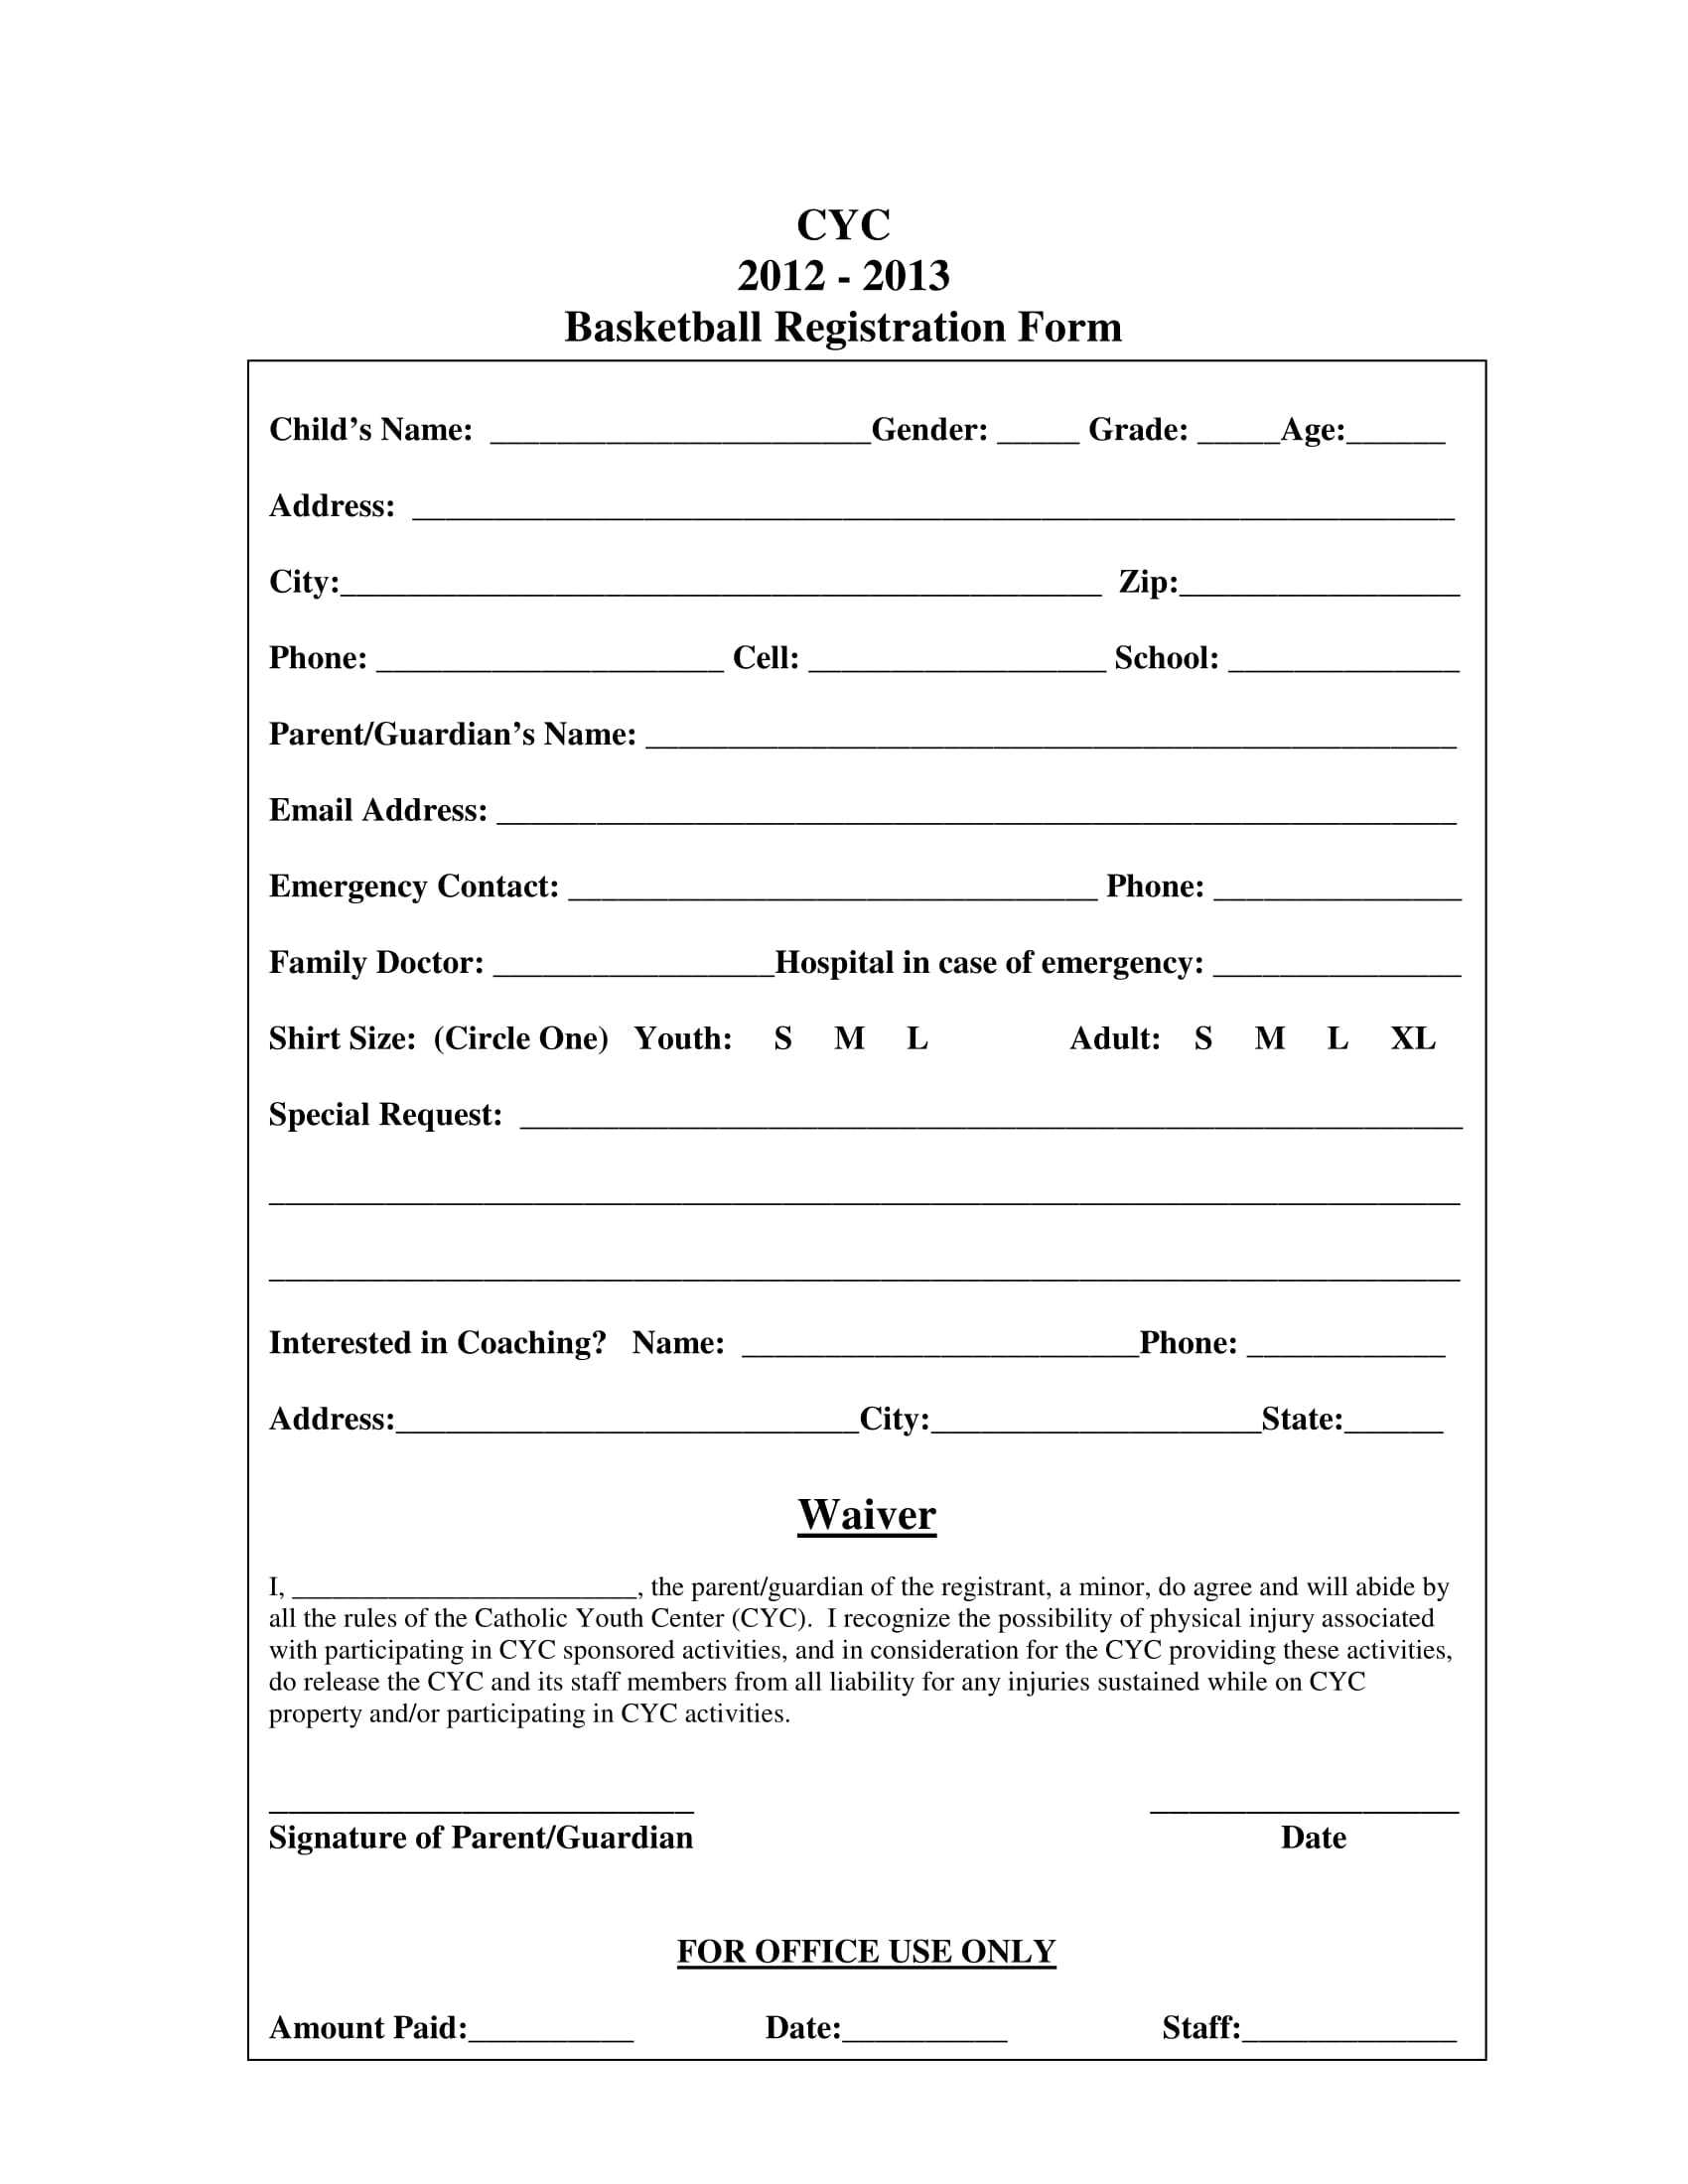 Basketball Registration Form Template Word – Dalep Intended For Registration Form Template Word Free